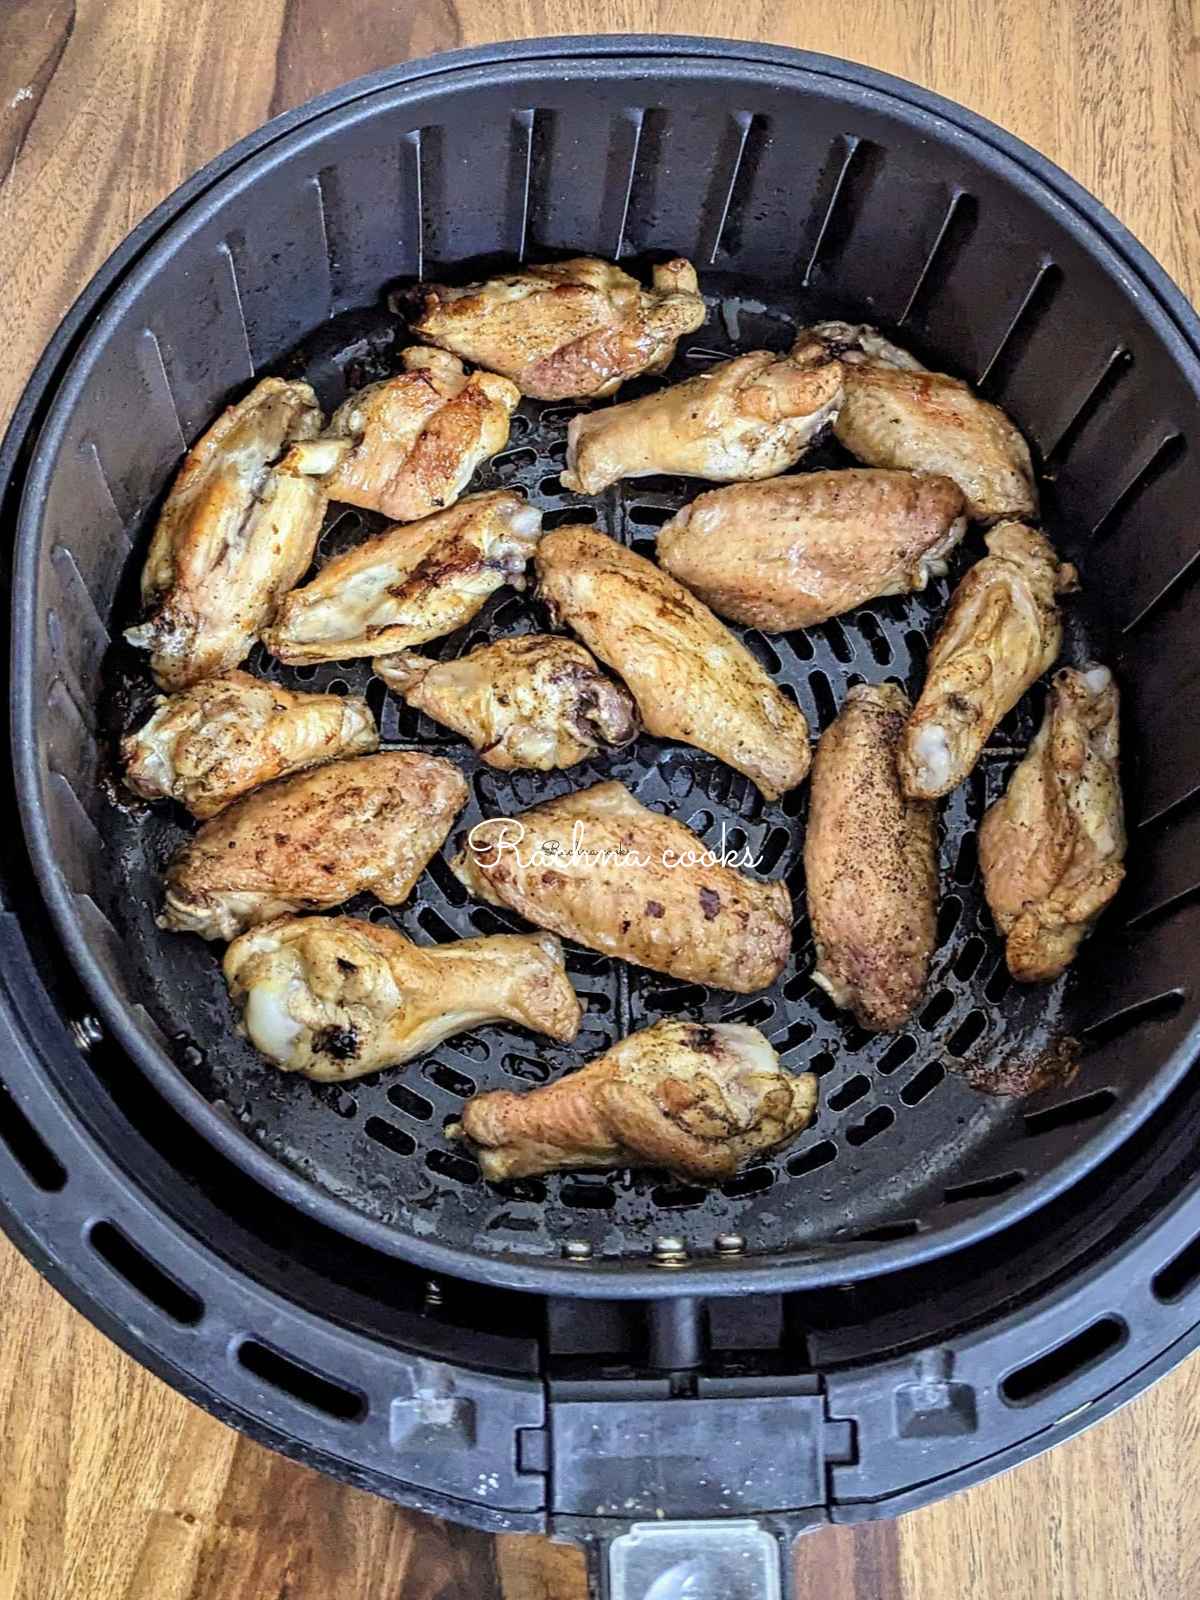 Chicken wings after air frying in air fryer basket.